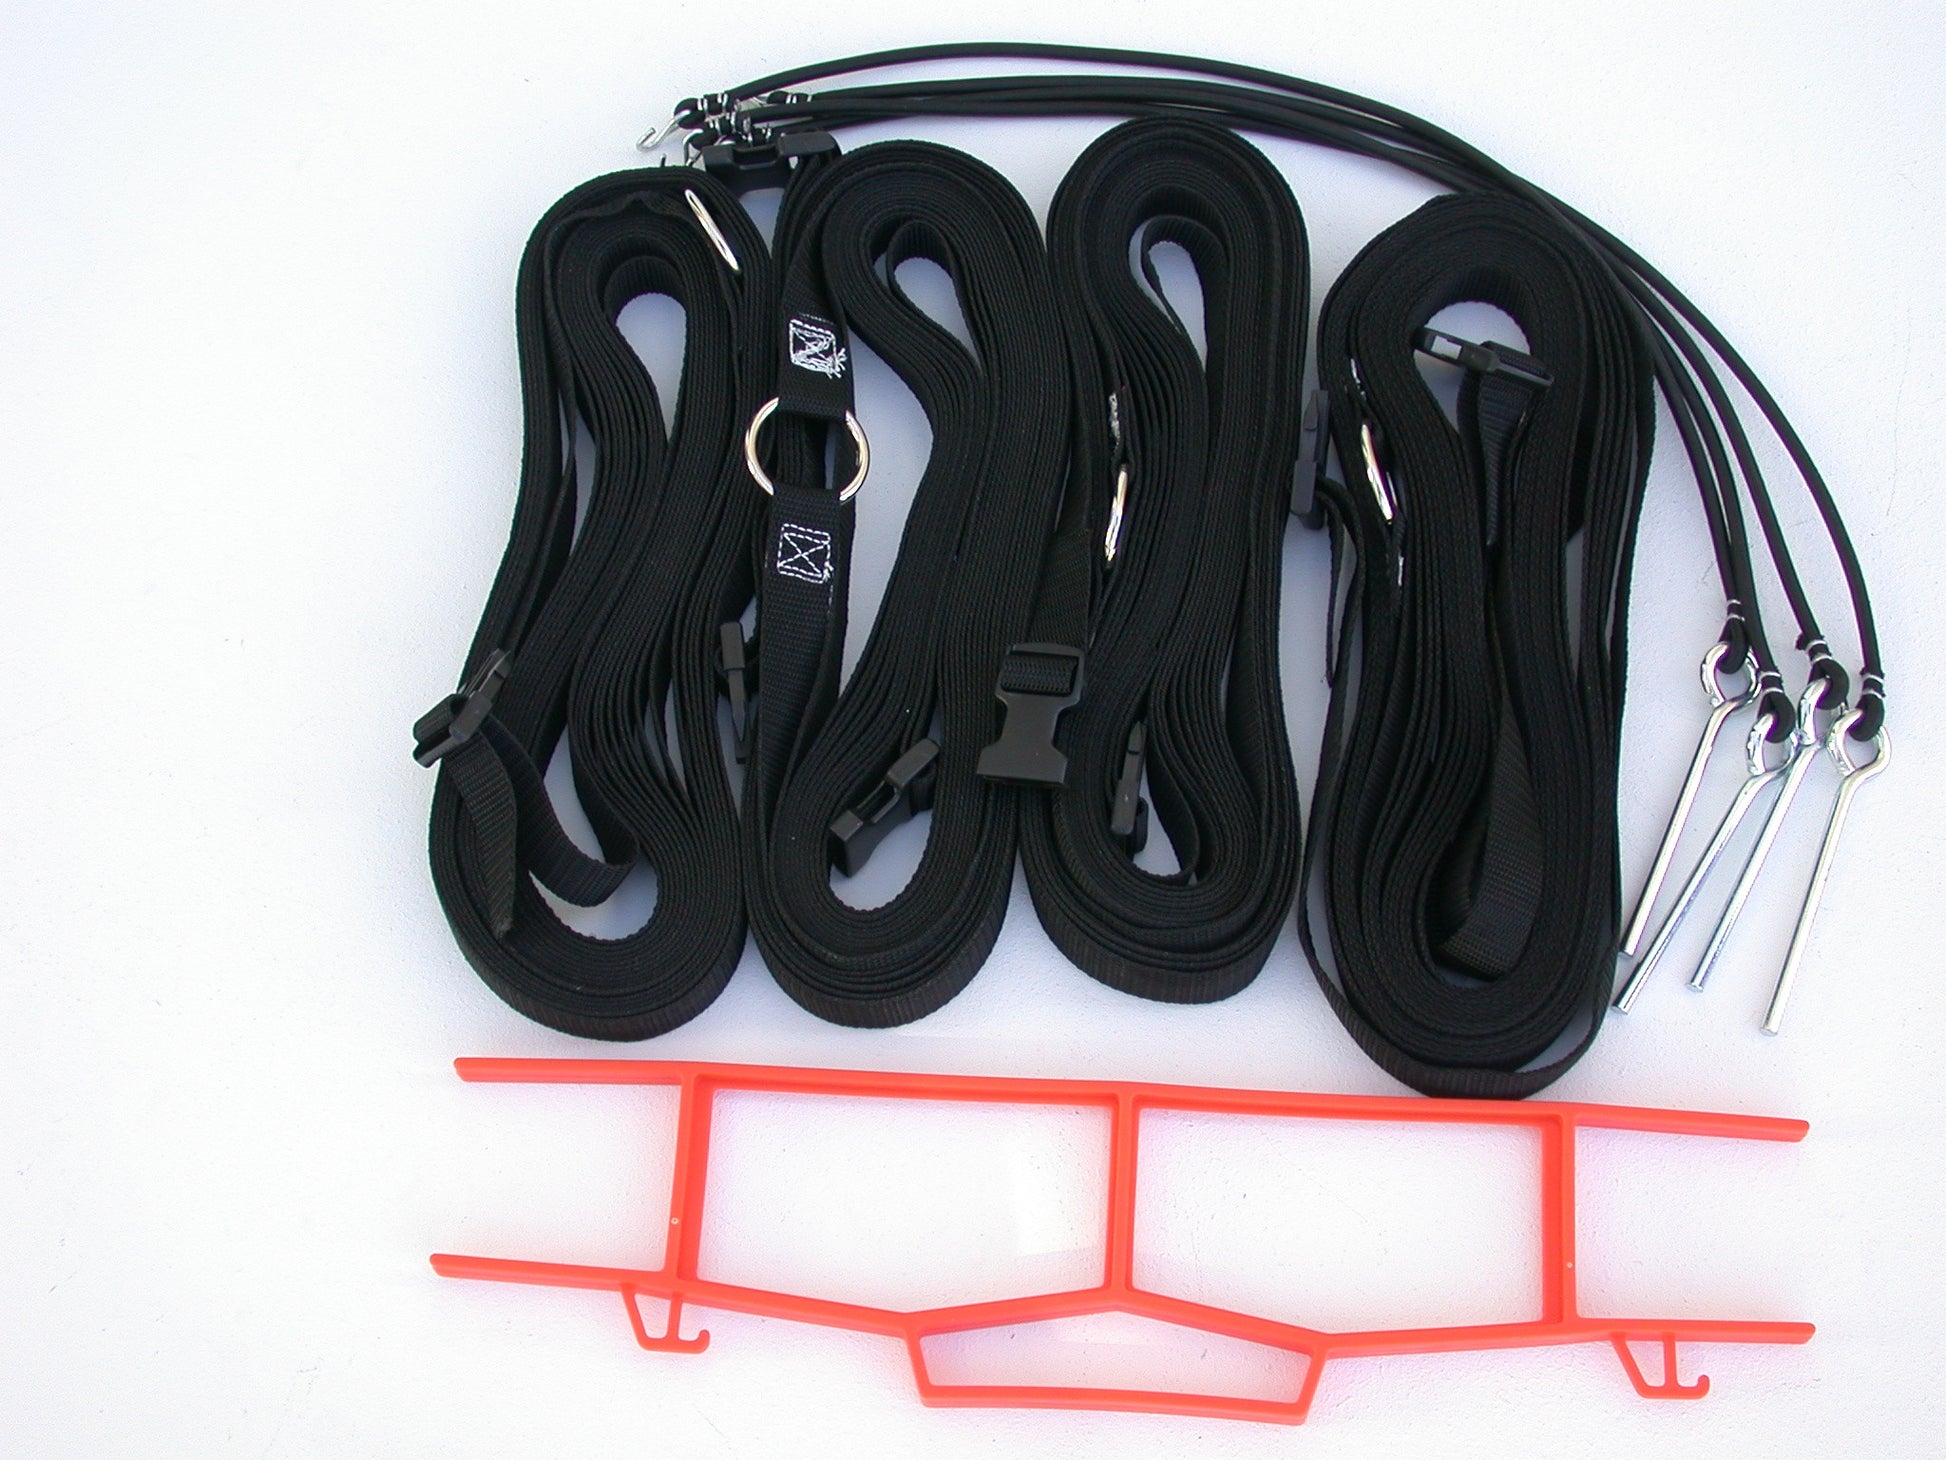 17ABKG-black 1-inch adjustable web boundary, grass pegs, storage winder